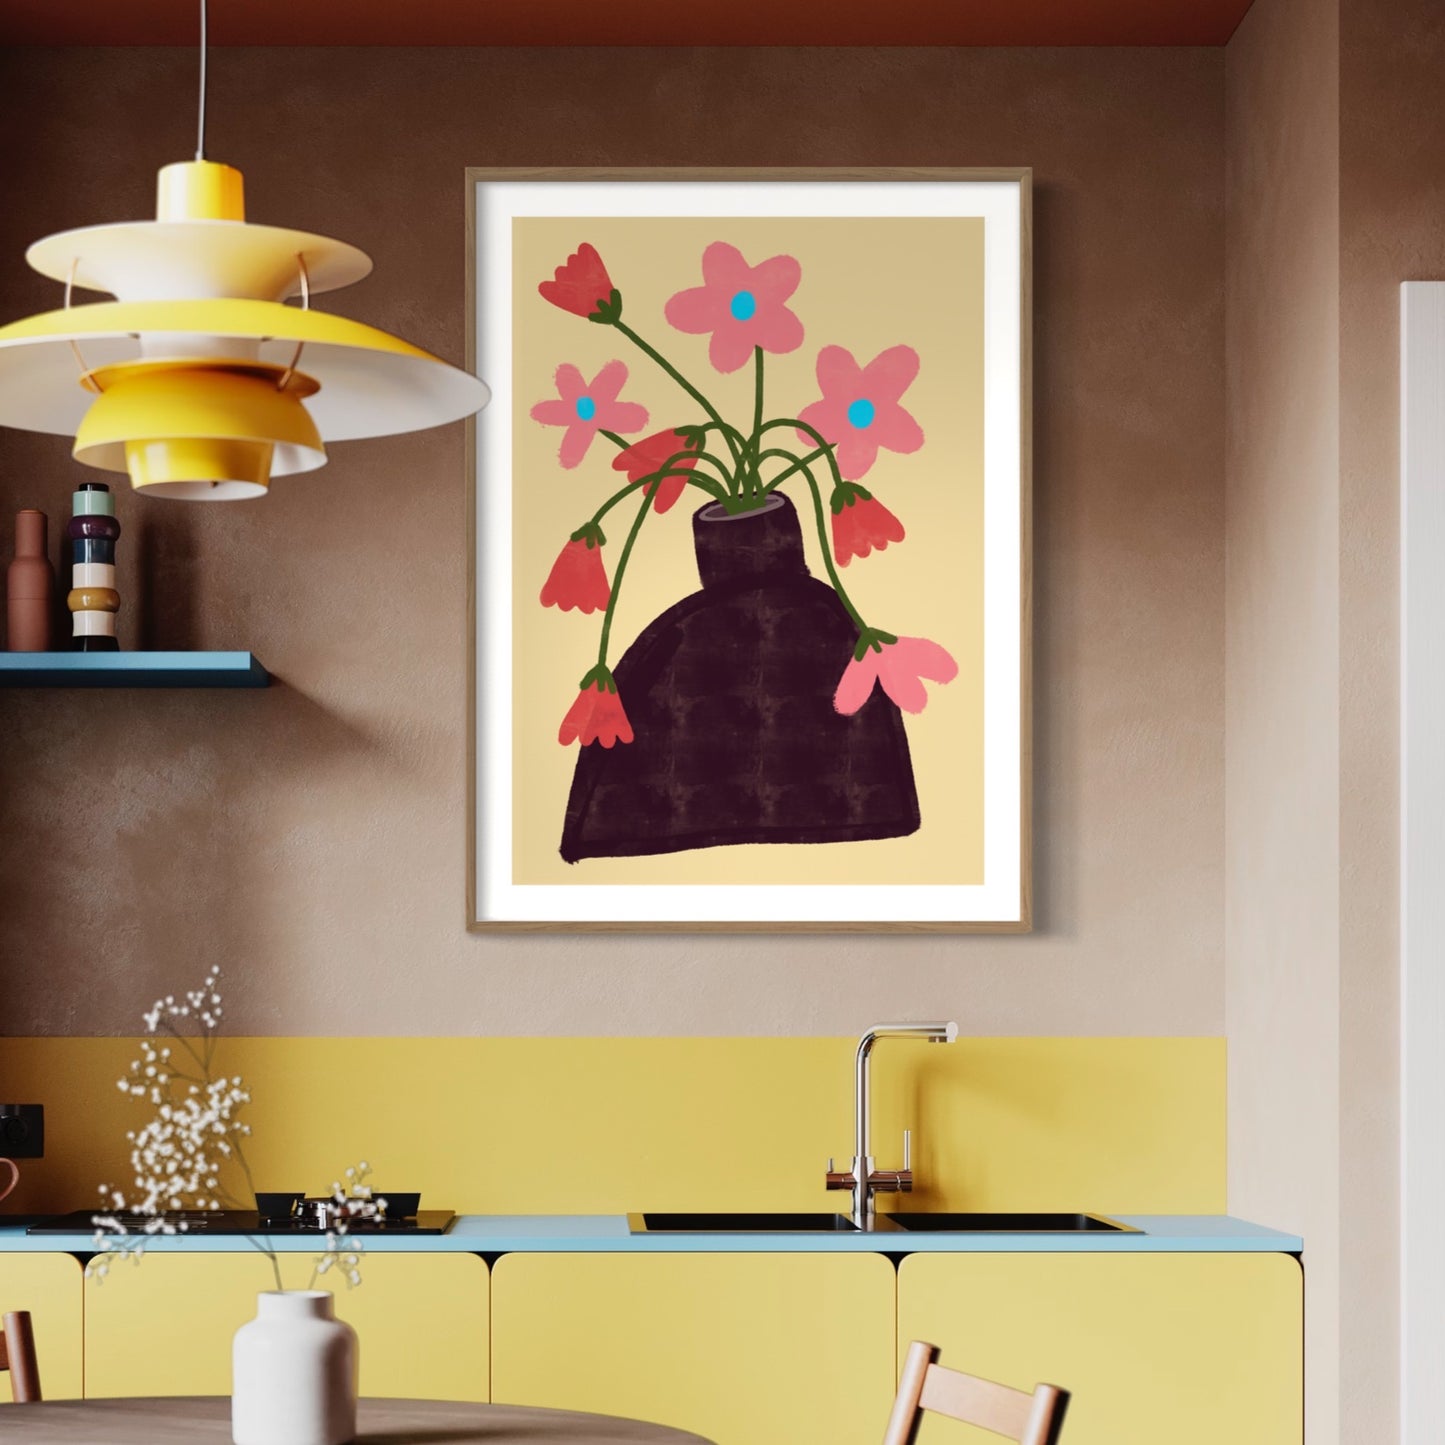 Flower Art | Daisies in a Vase | Art Print